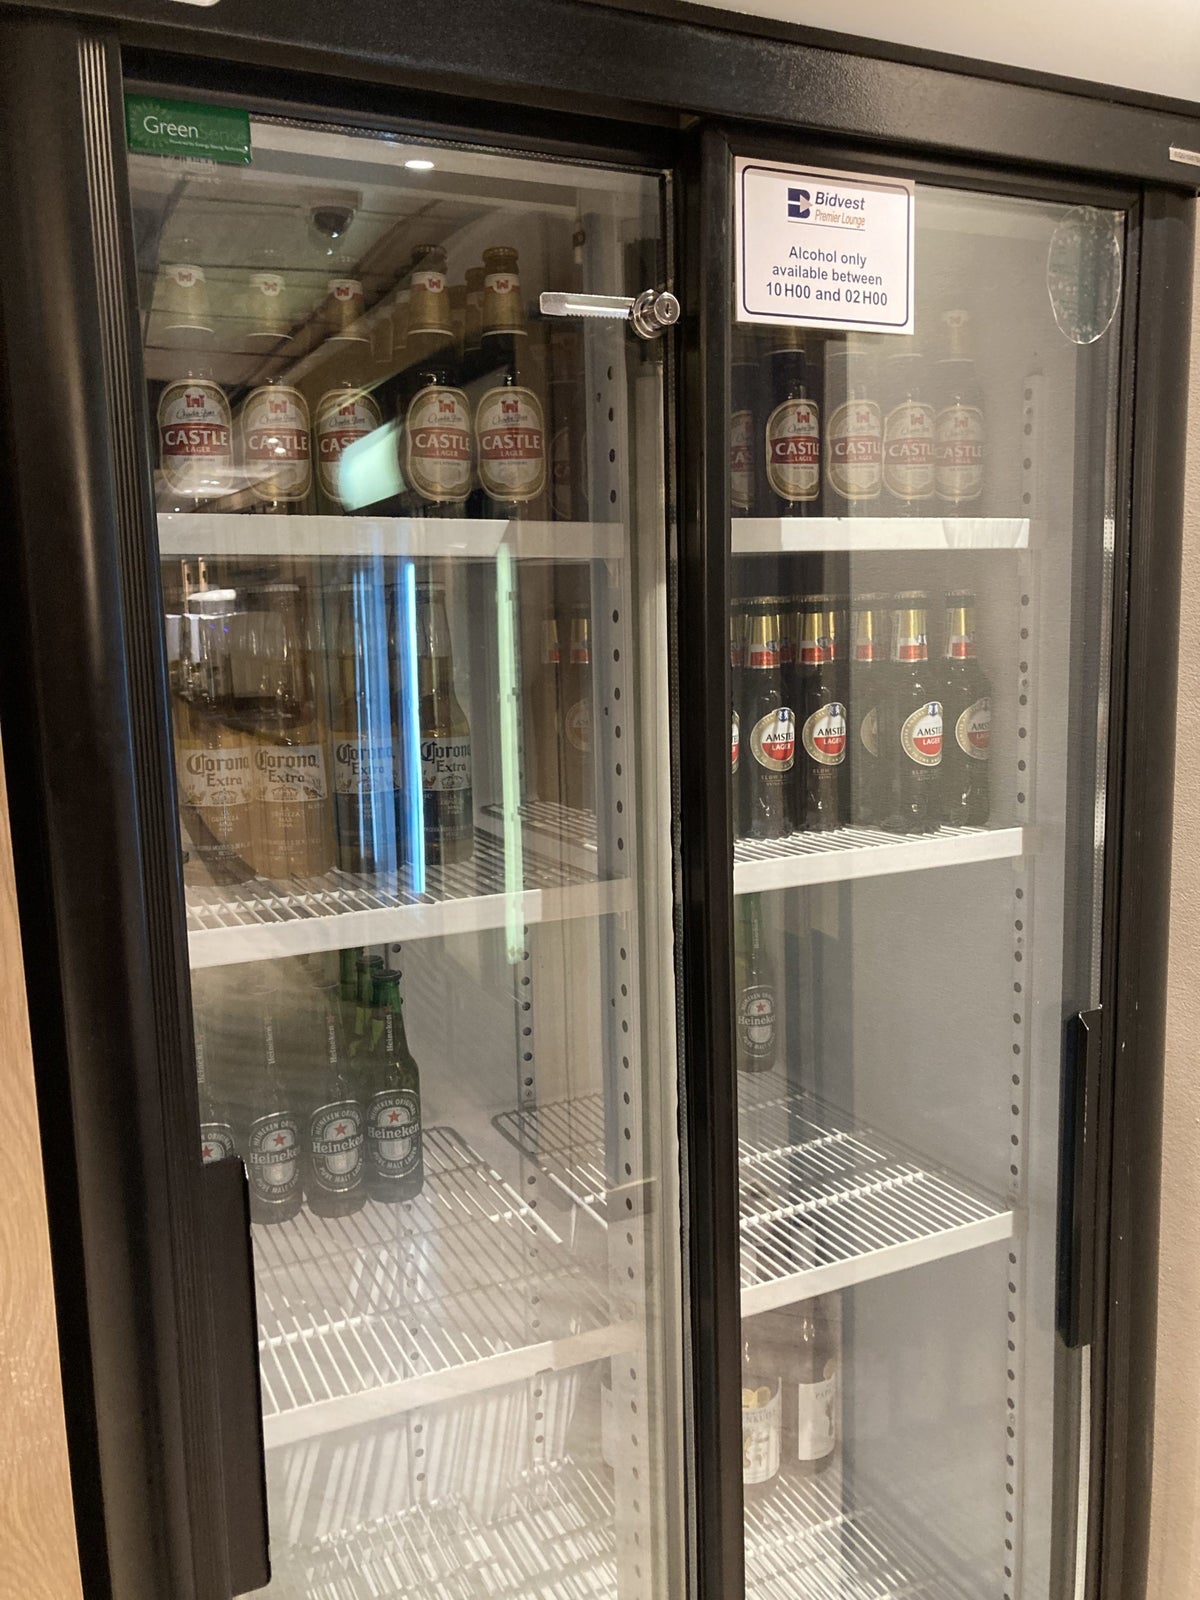 Bidvest Premier Lounge beer fridge